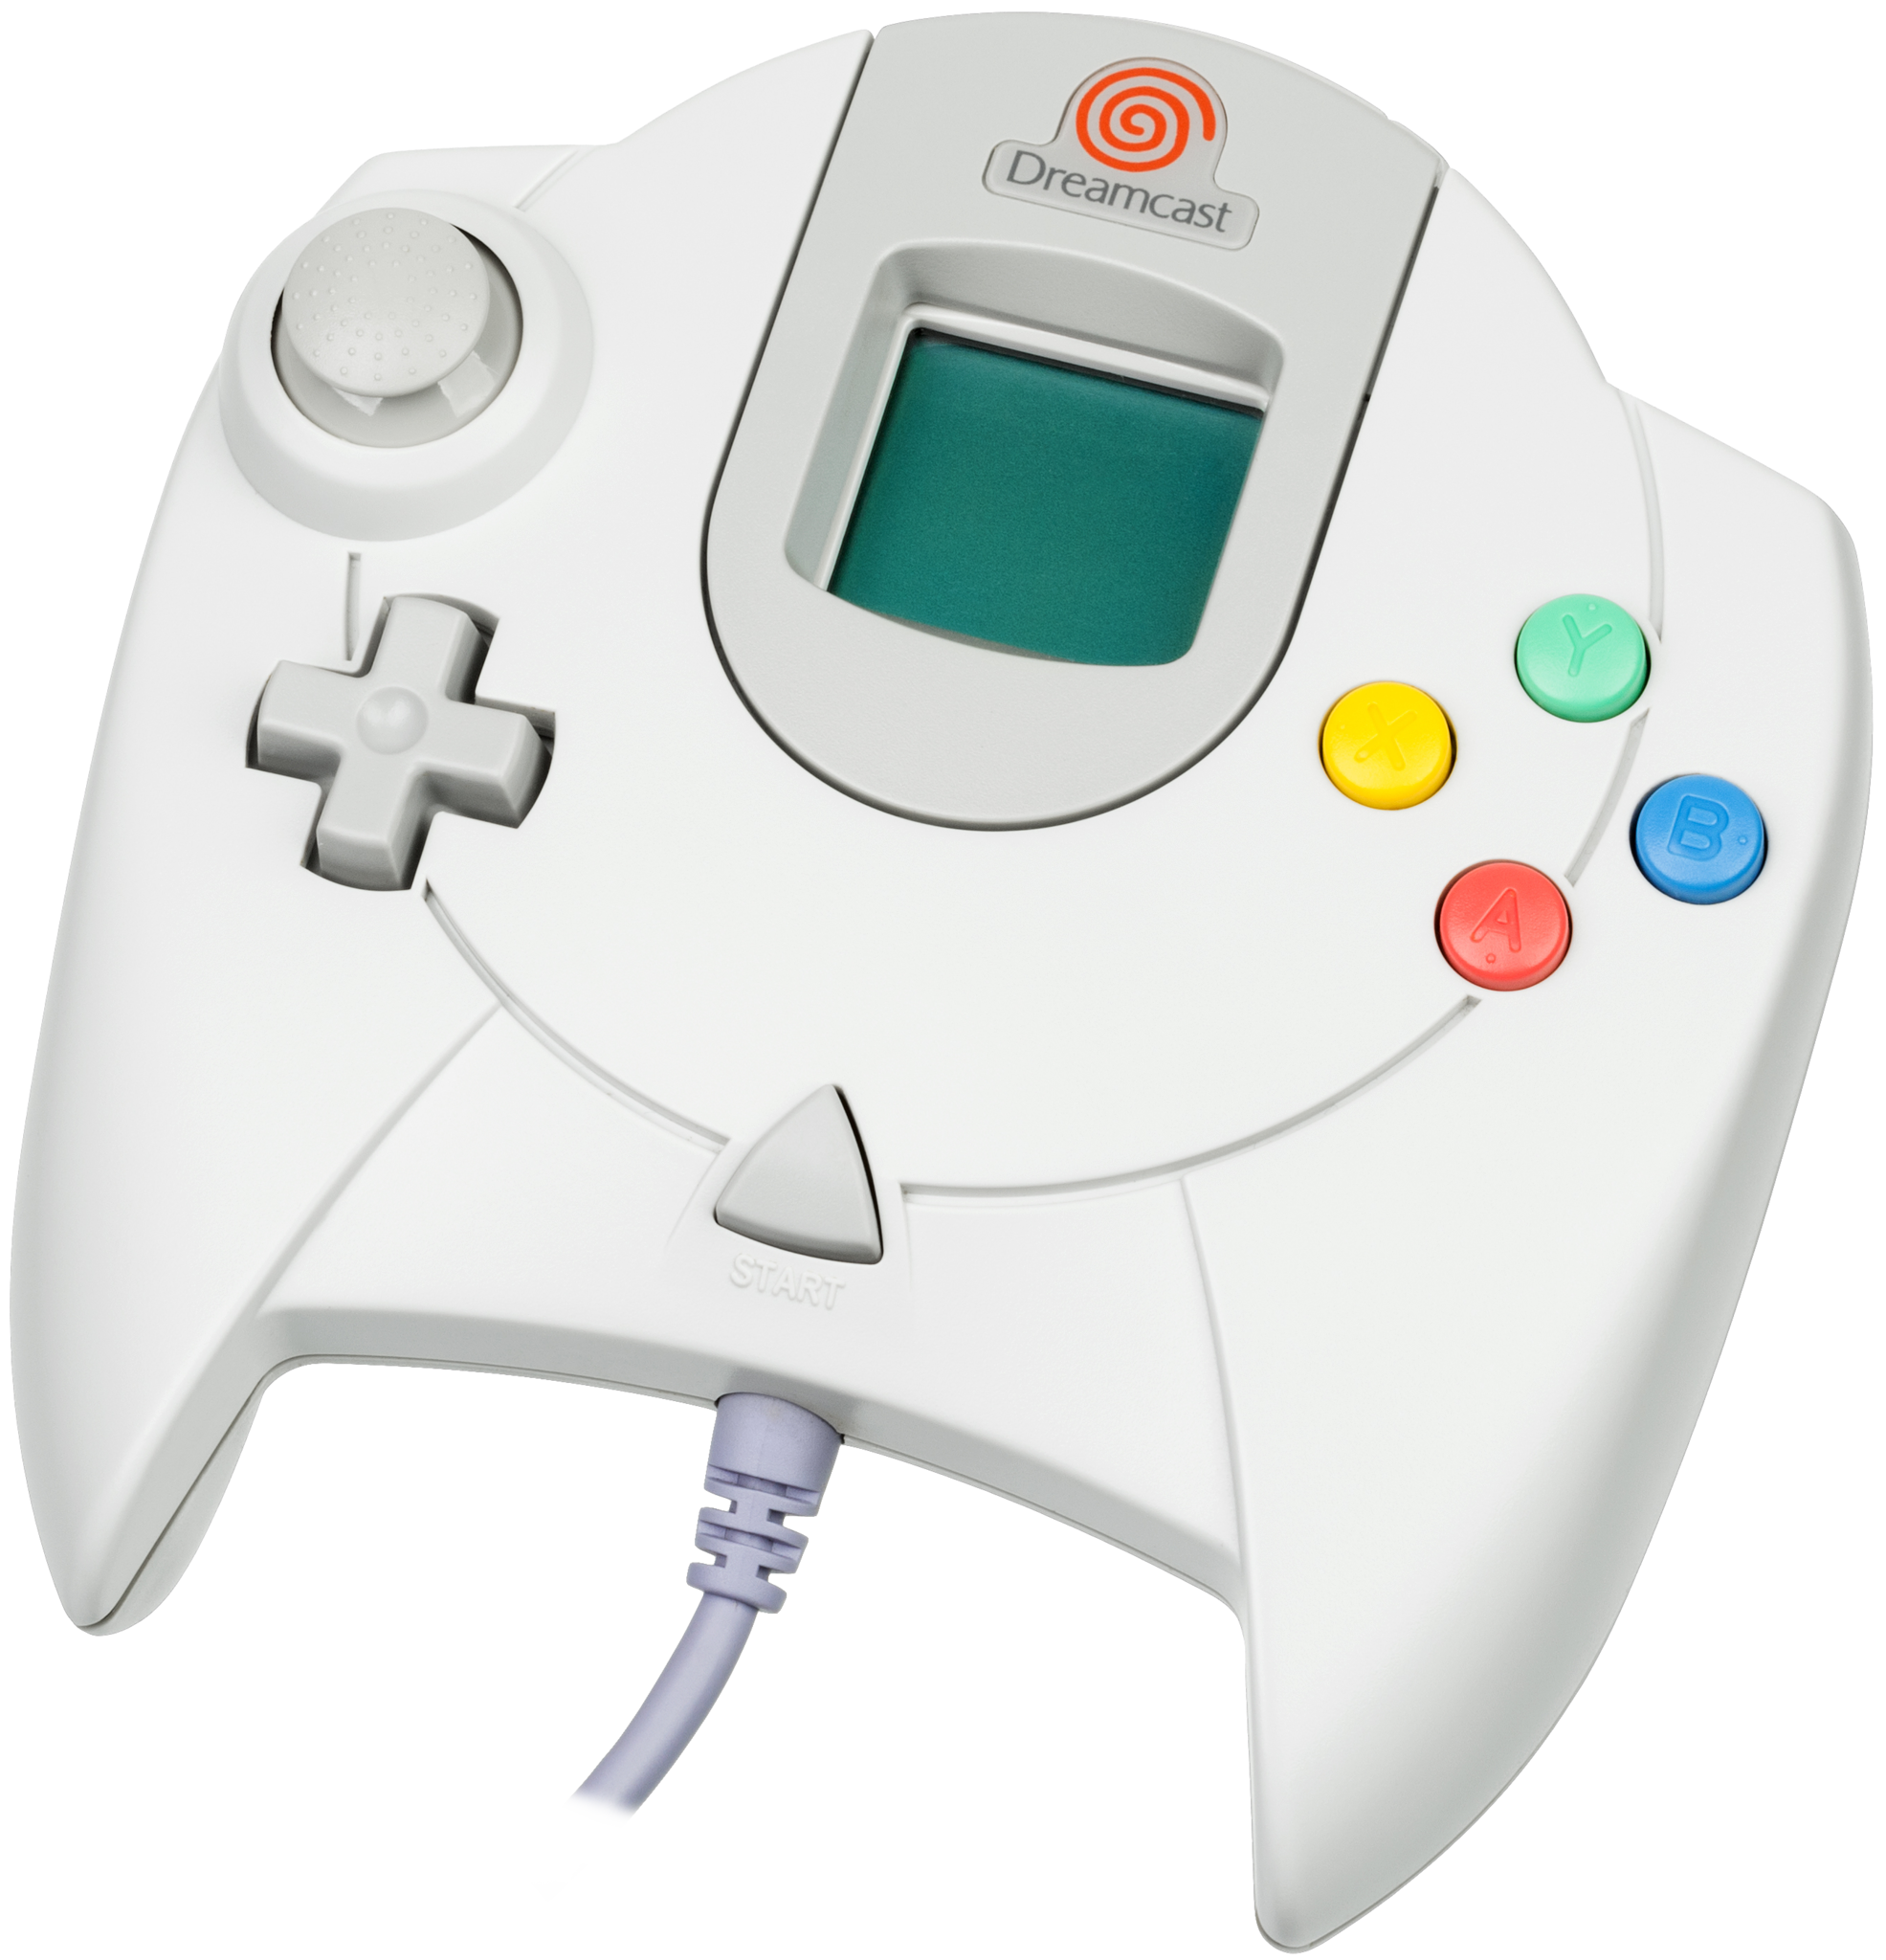 Game controller - Wikipedia